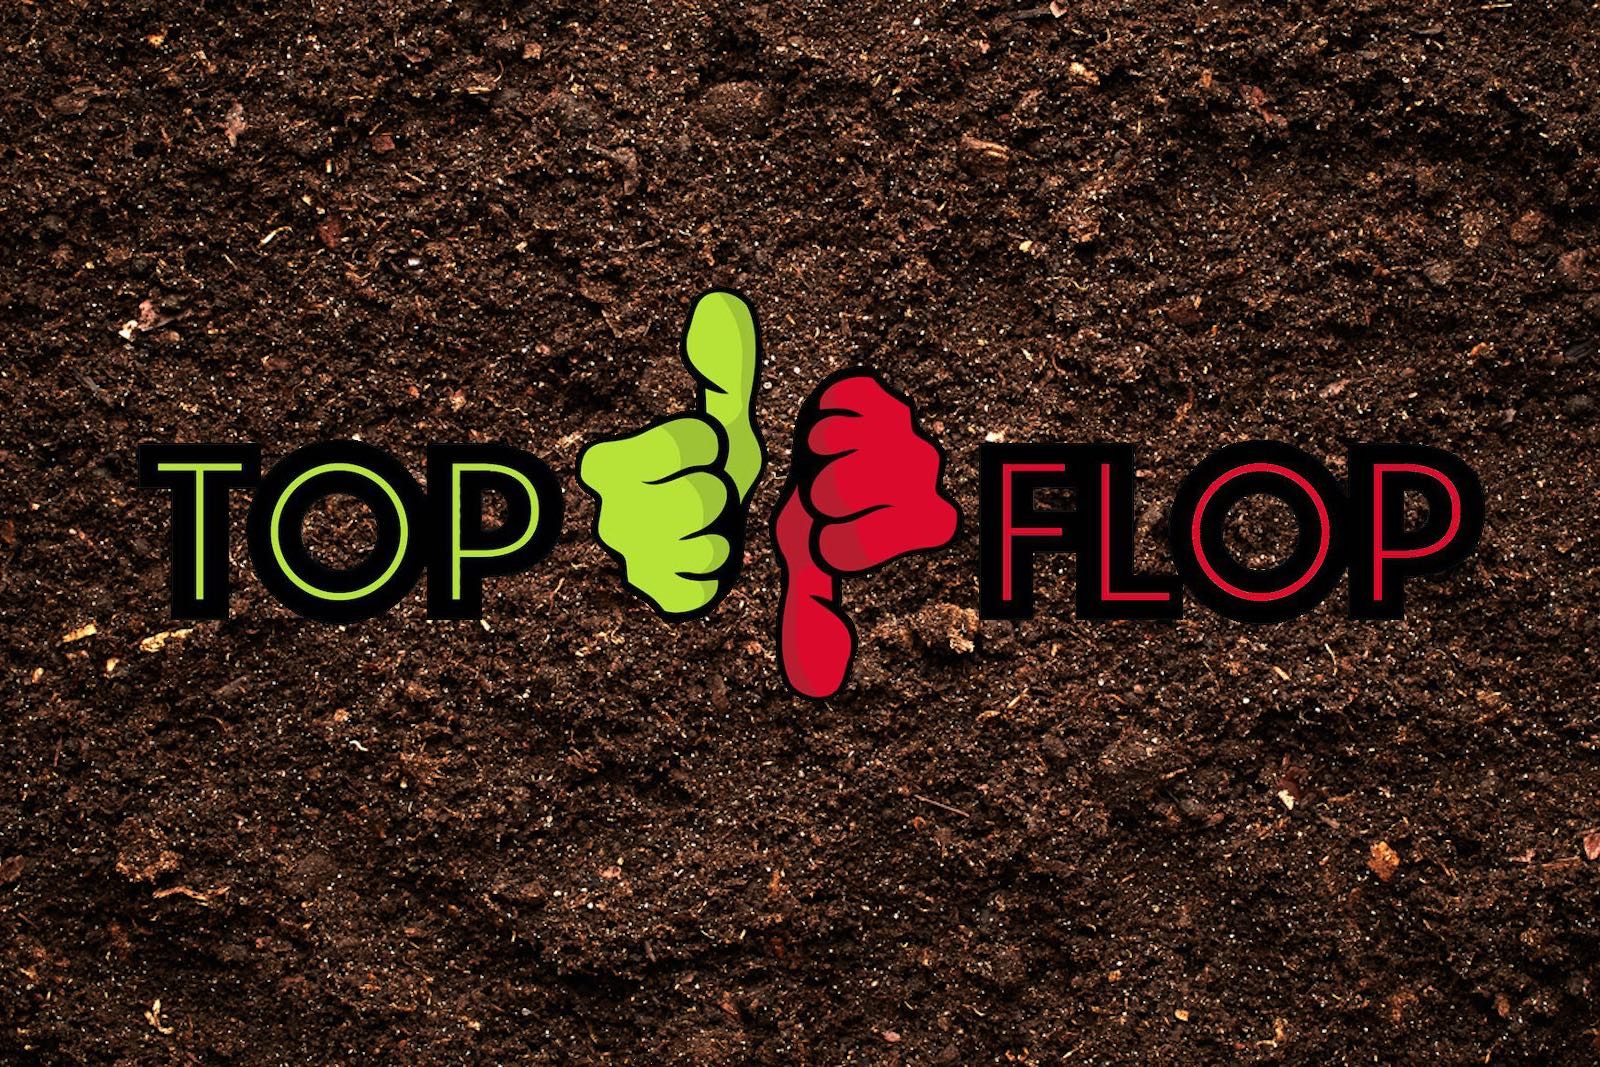 Top-Flop-soil-1600x1067.jpg